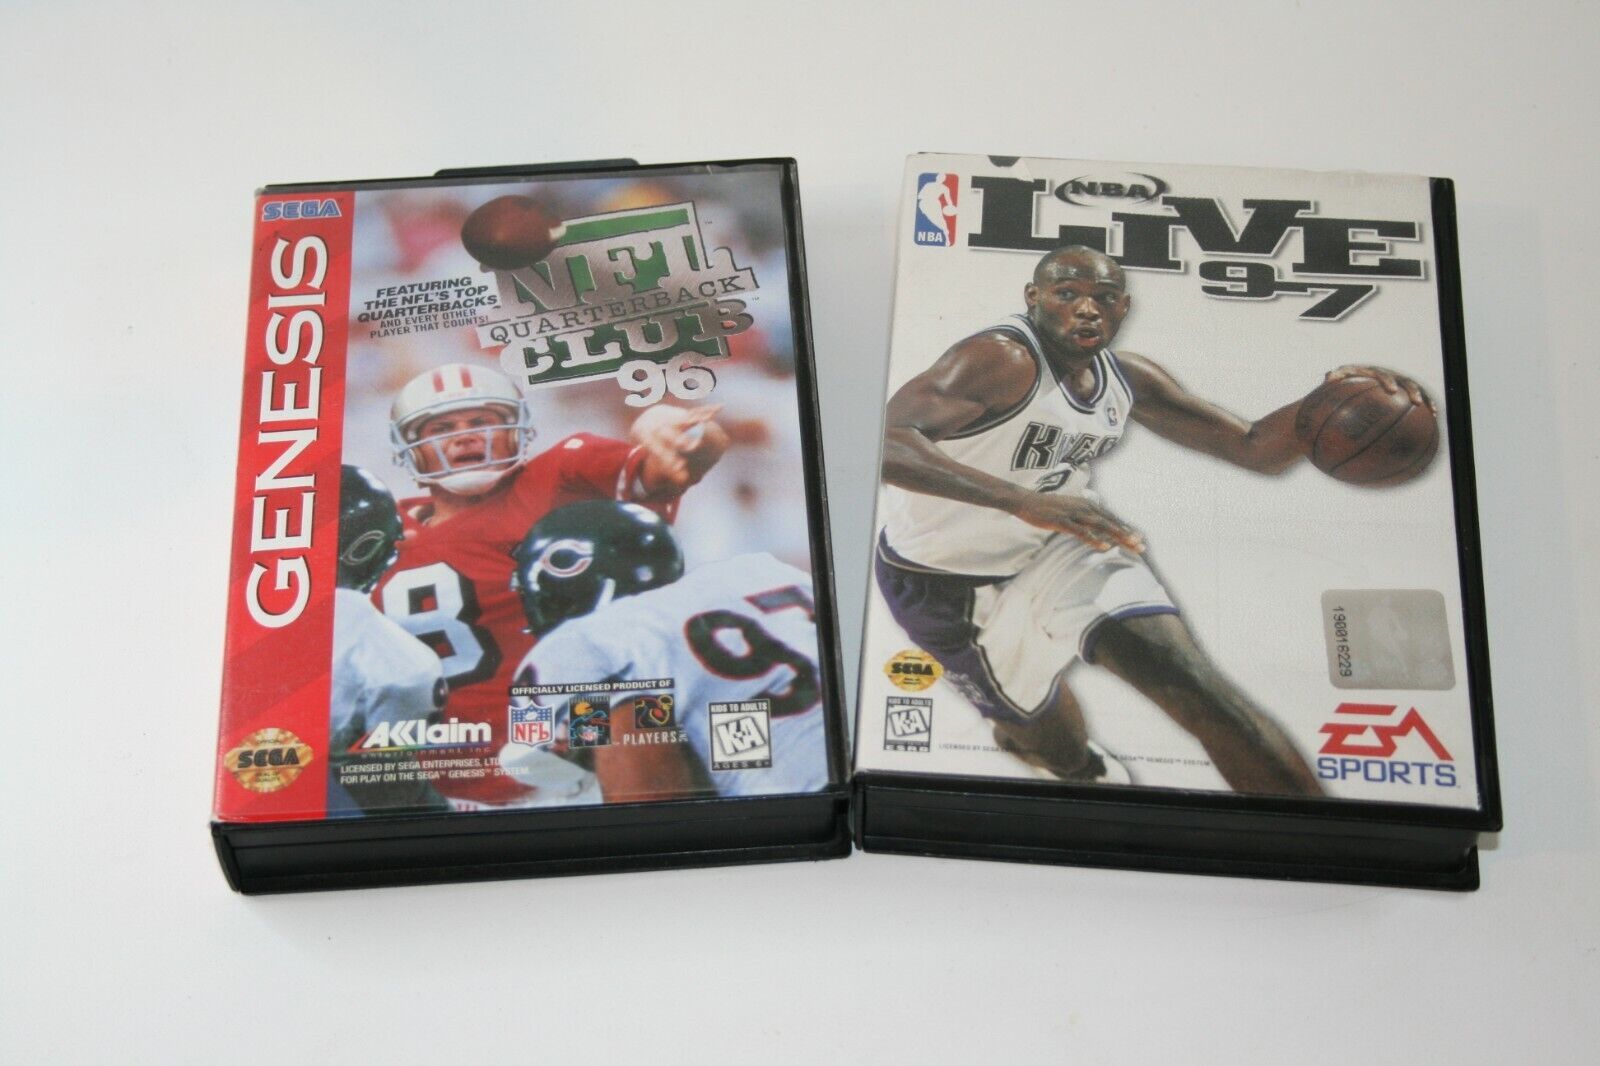 Primary image for Two Sega Genesis Games - NFL Quarterback Club 96 and NBA Live 97 (No Manuals)